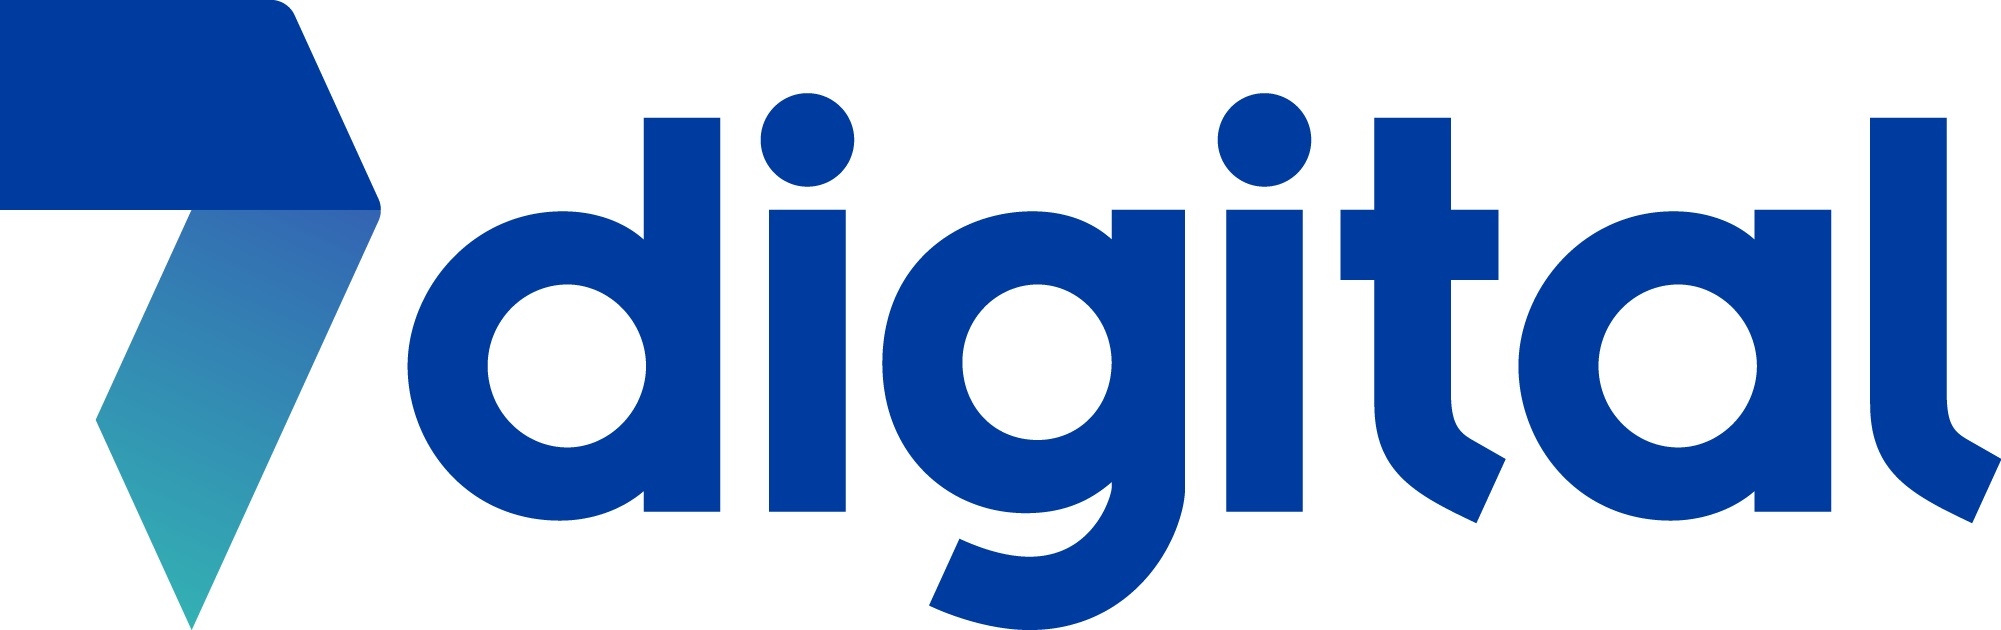 7digital_logo_0.jpg